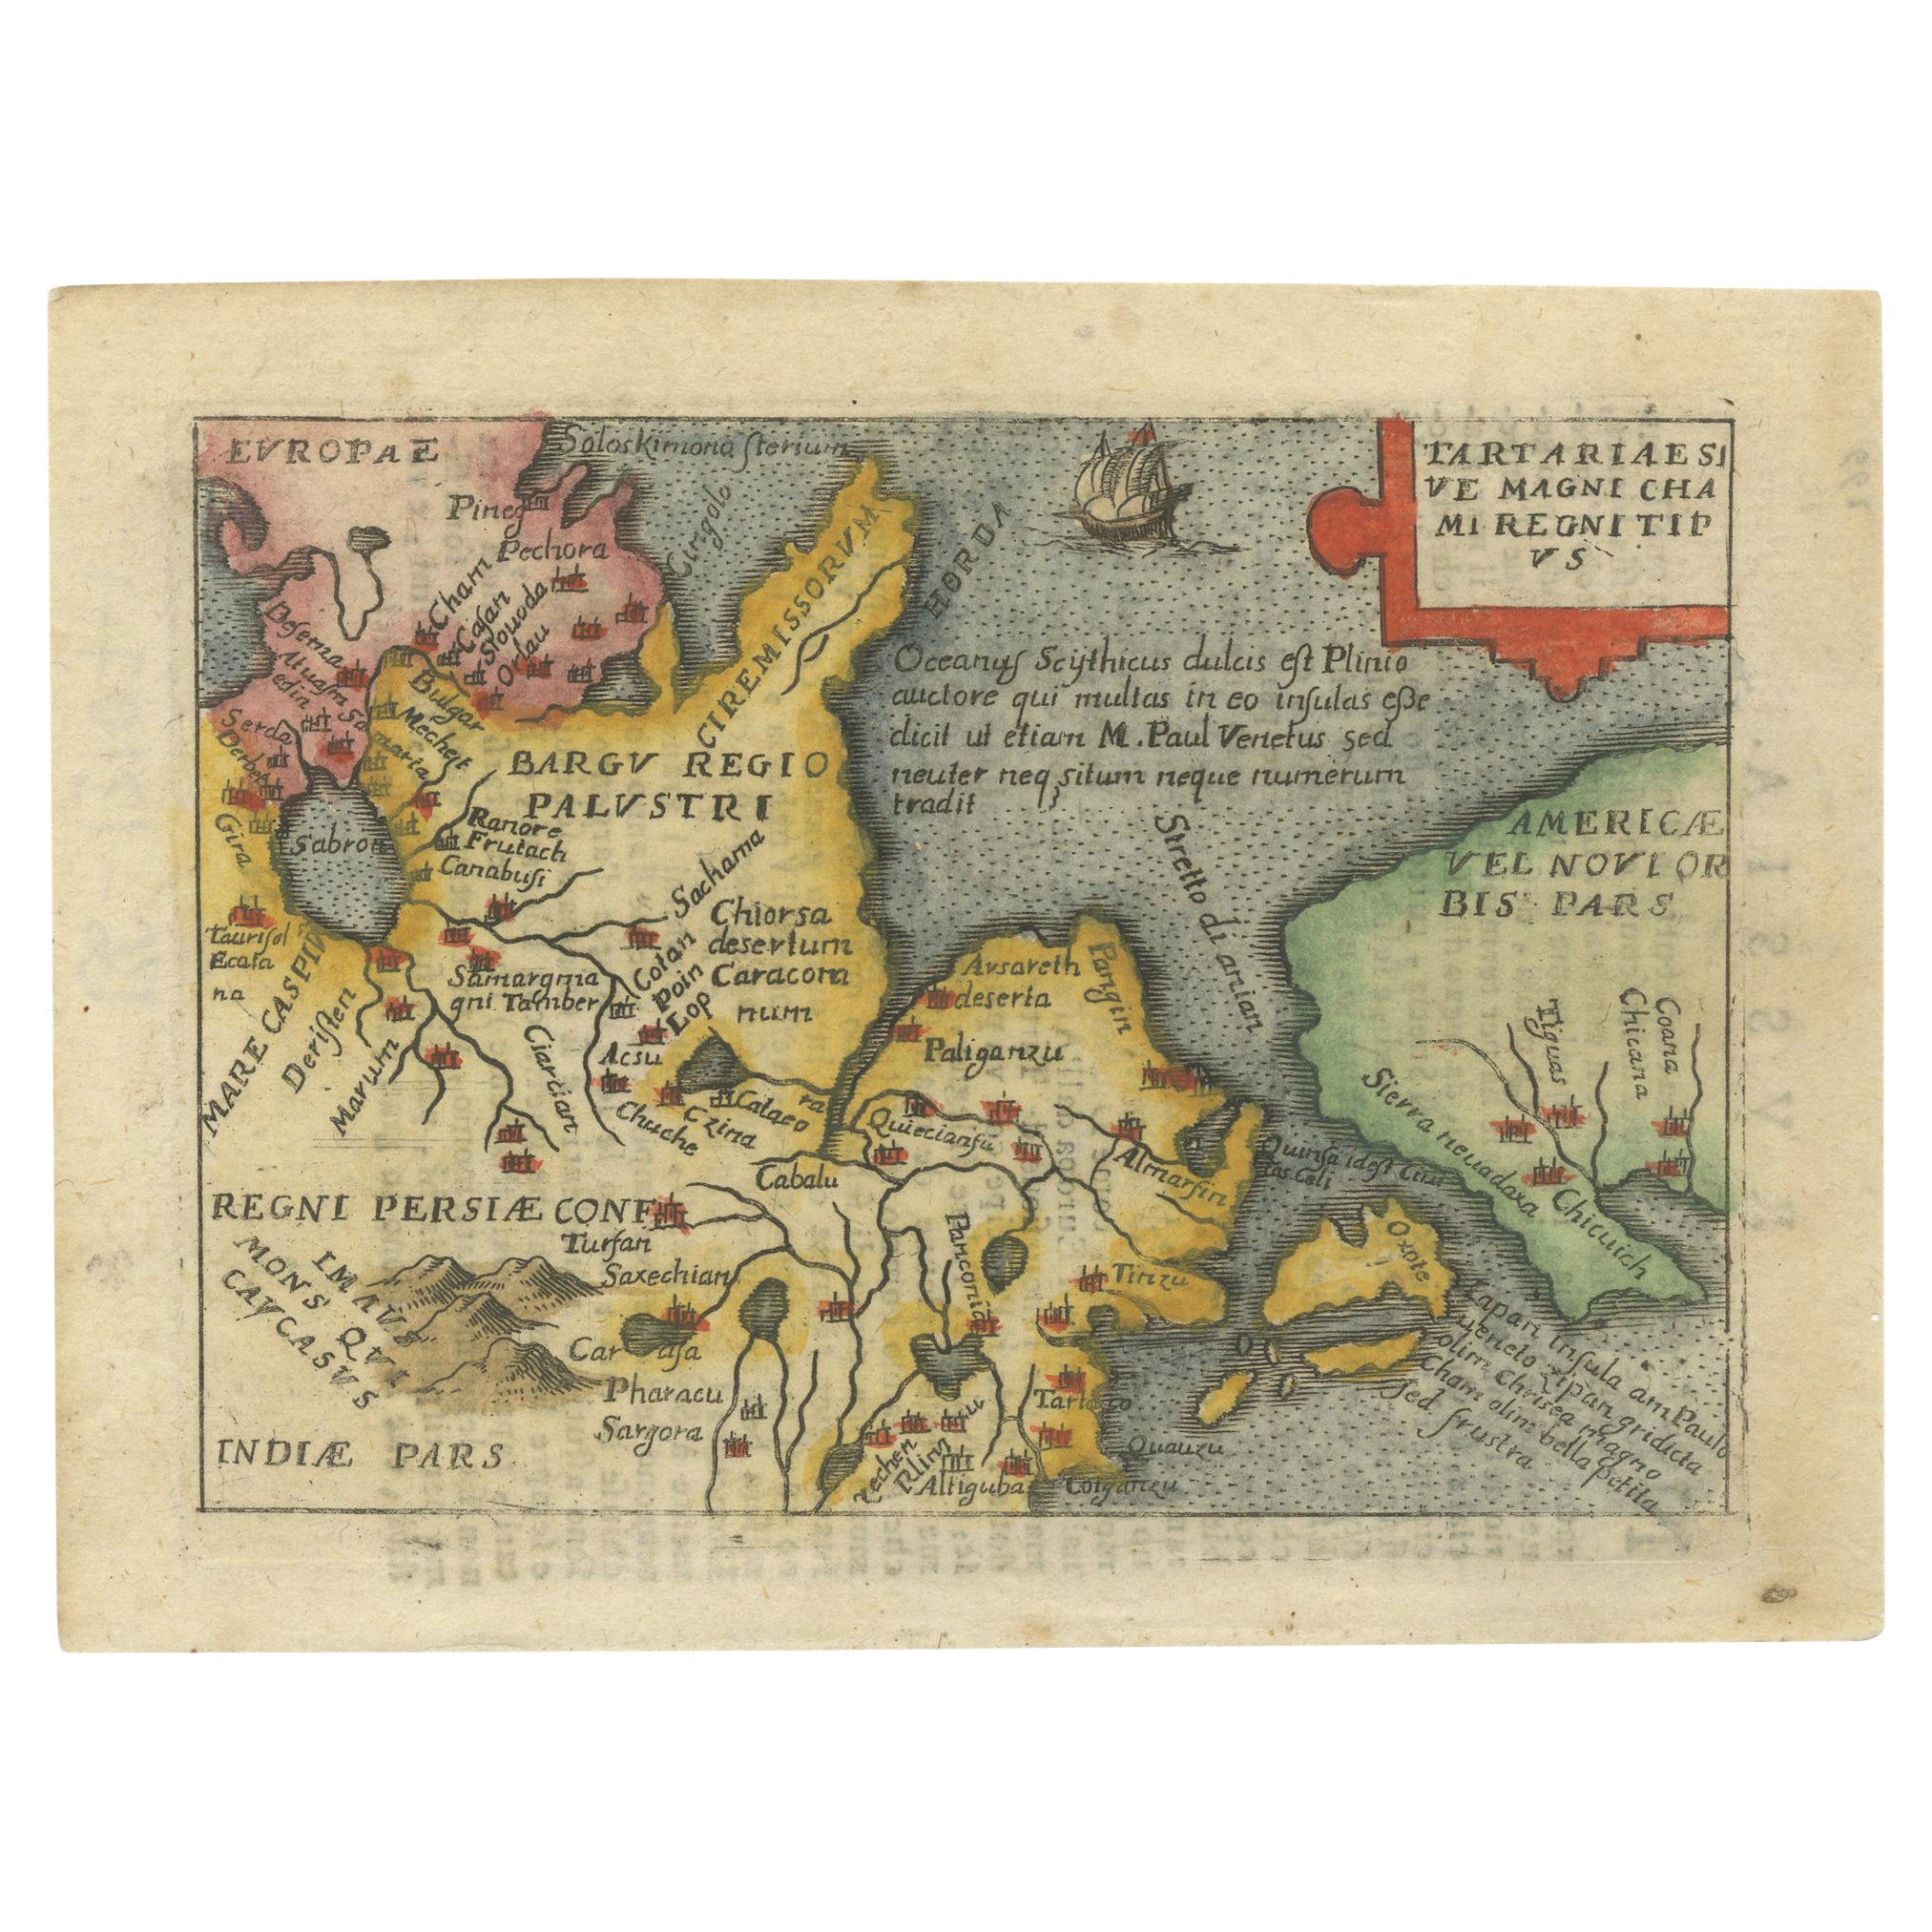 Rare Miniature Map of Tartary, California and Japan, ca. 1655